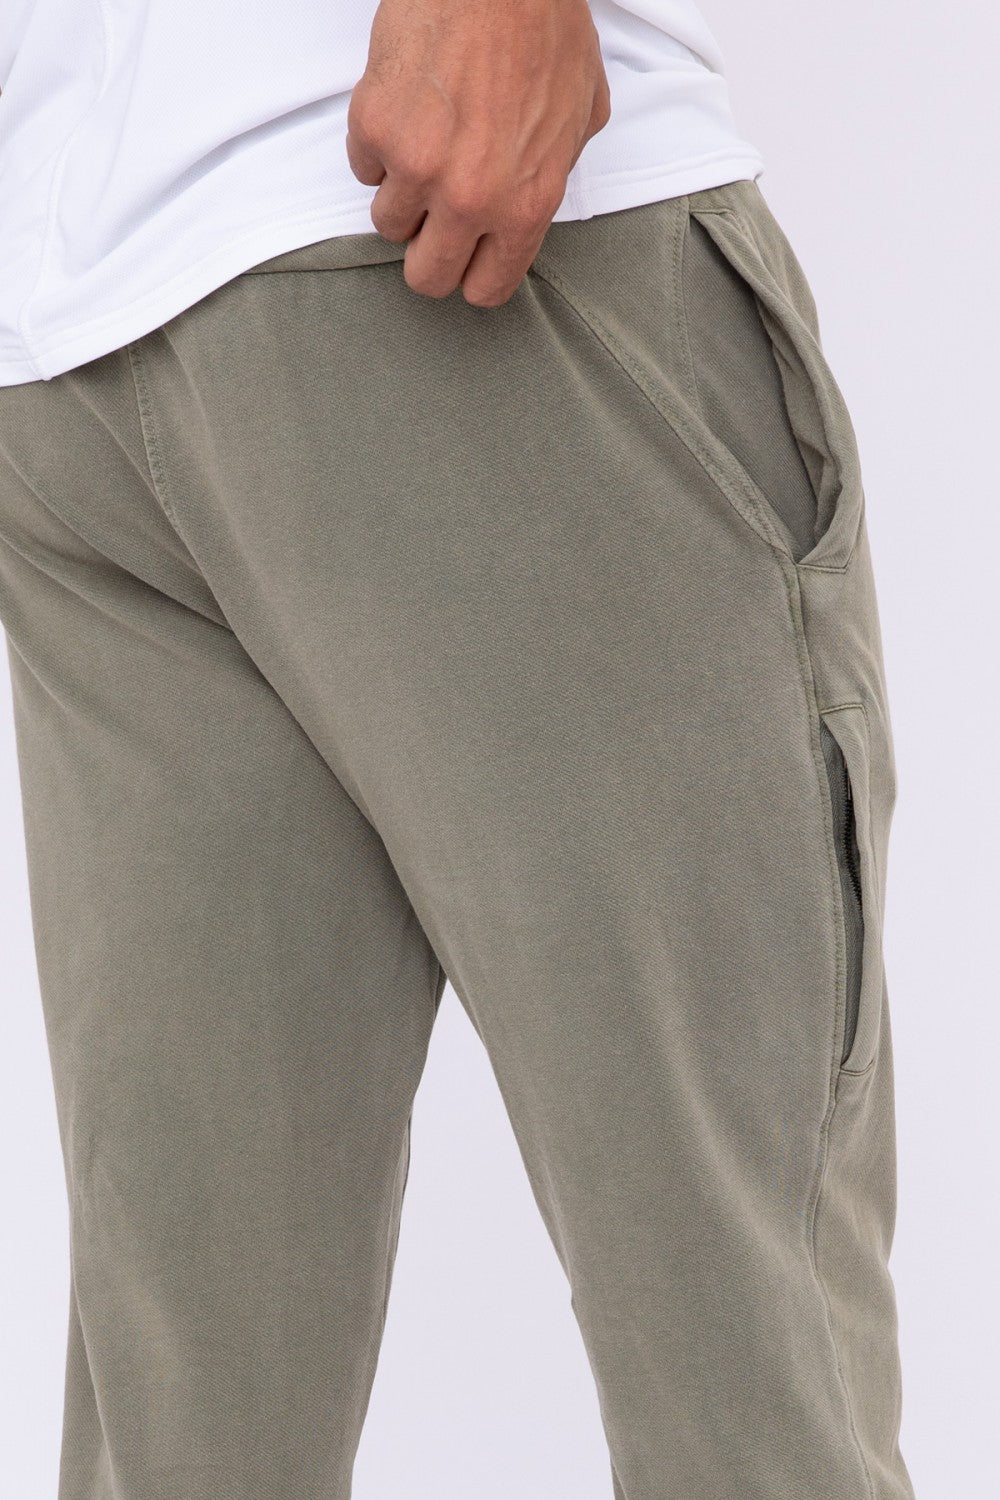 Men's Olive Twill Joggers With Hidden Zip pocket